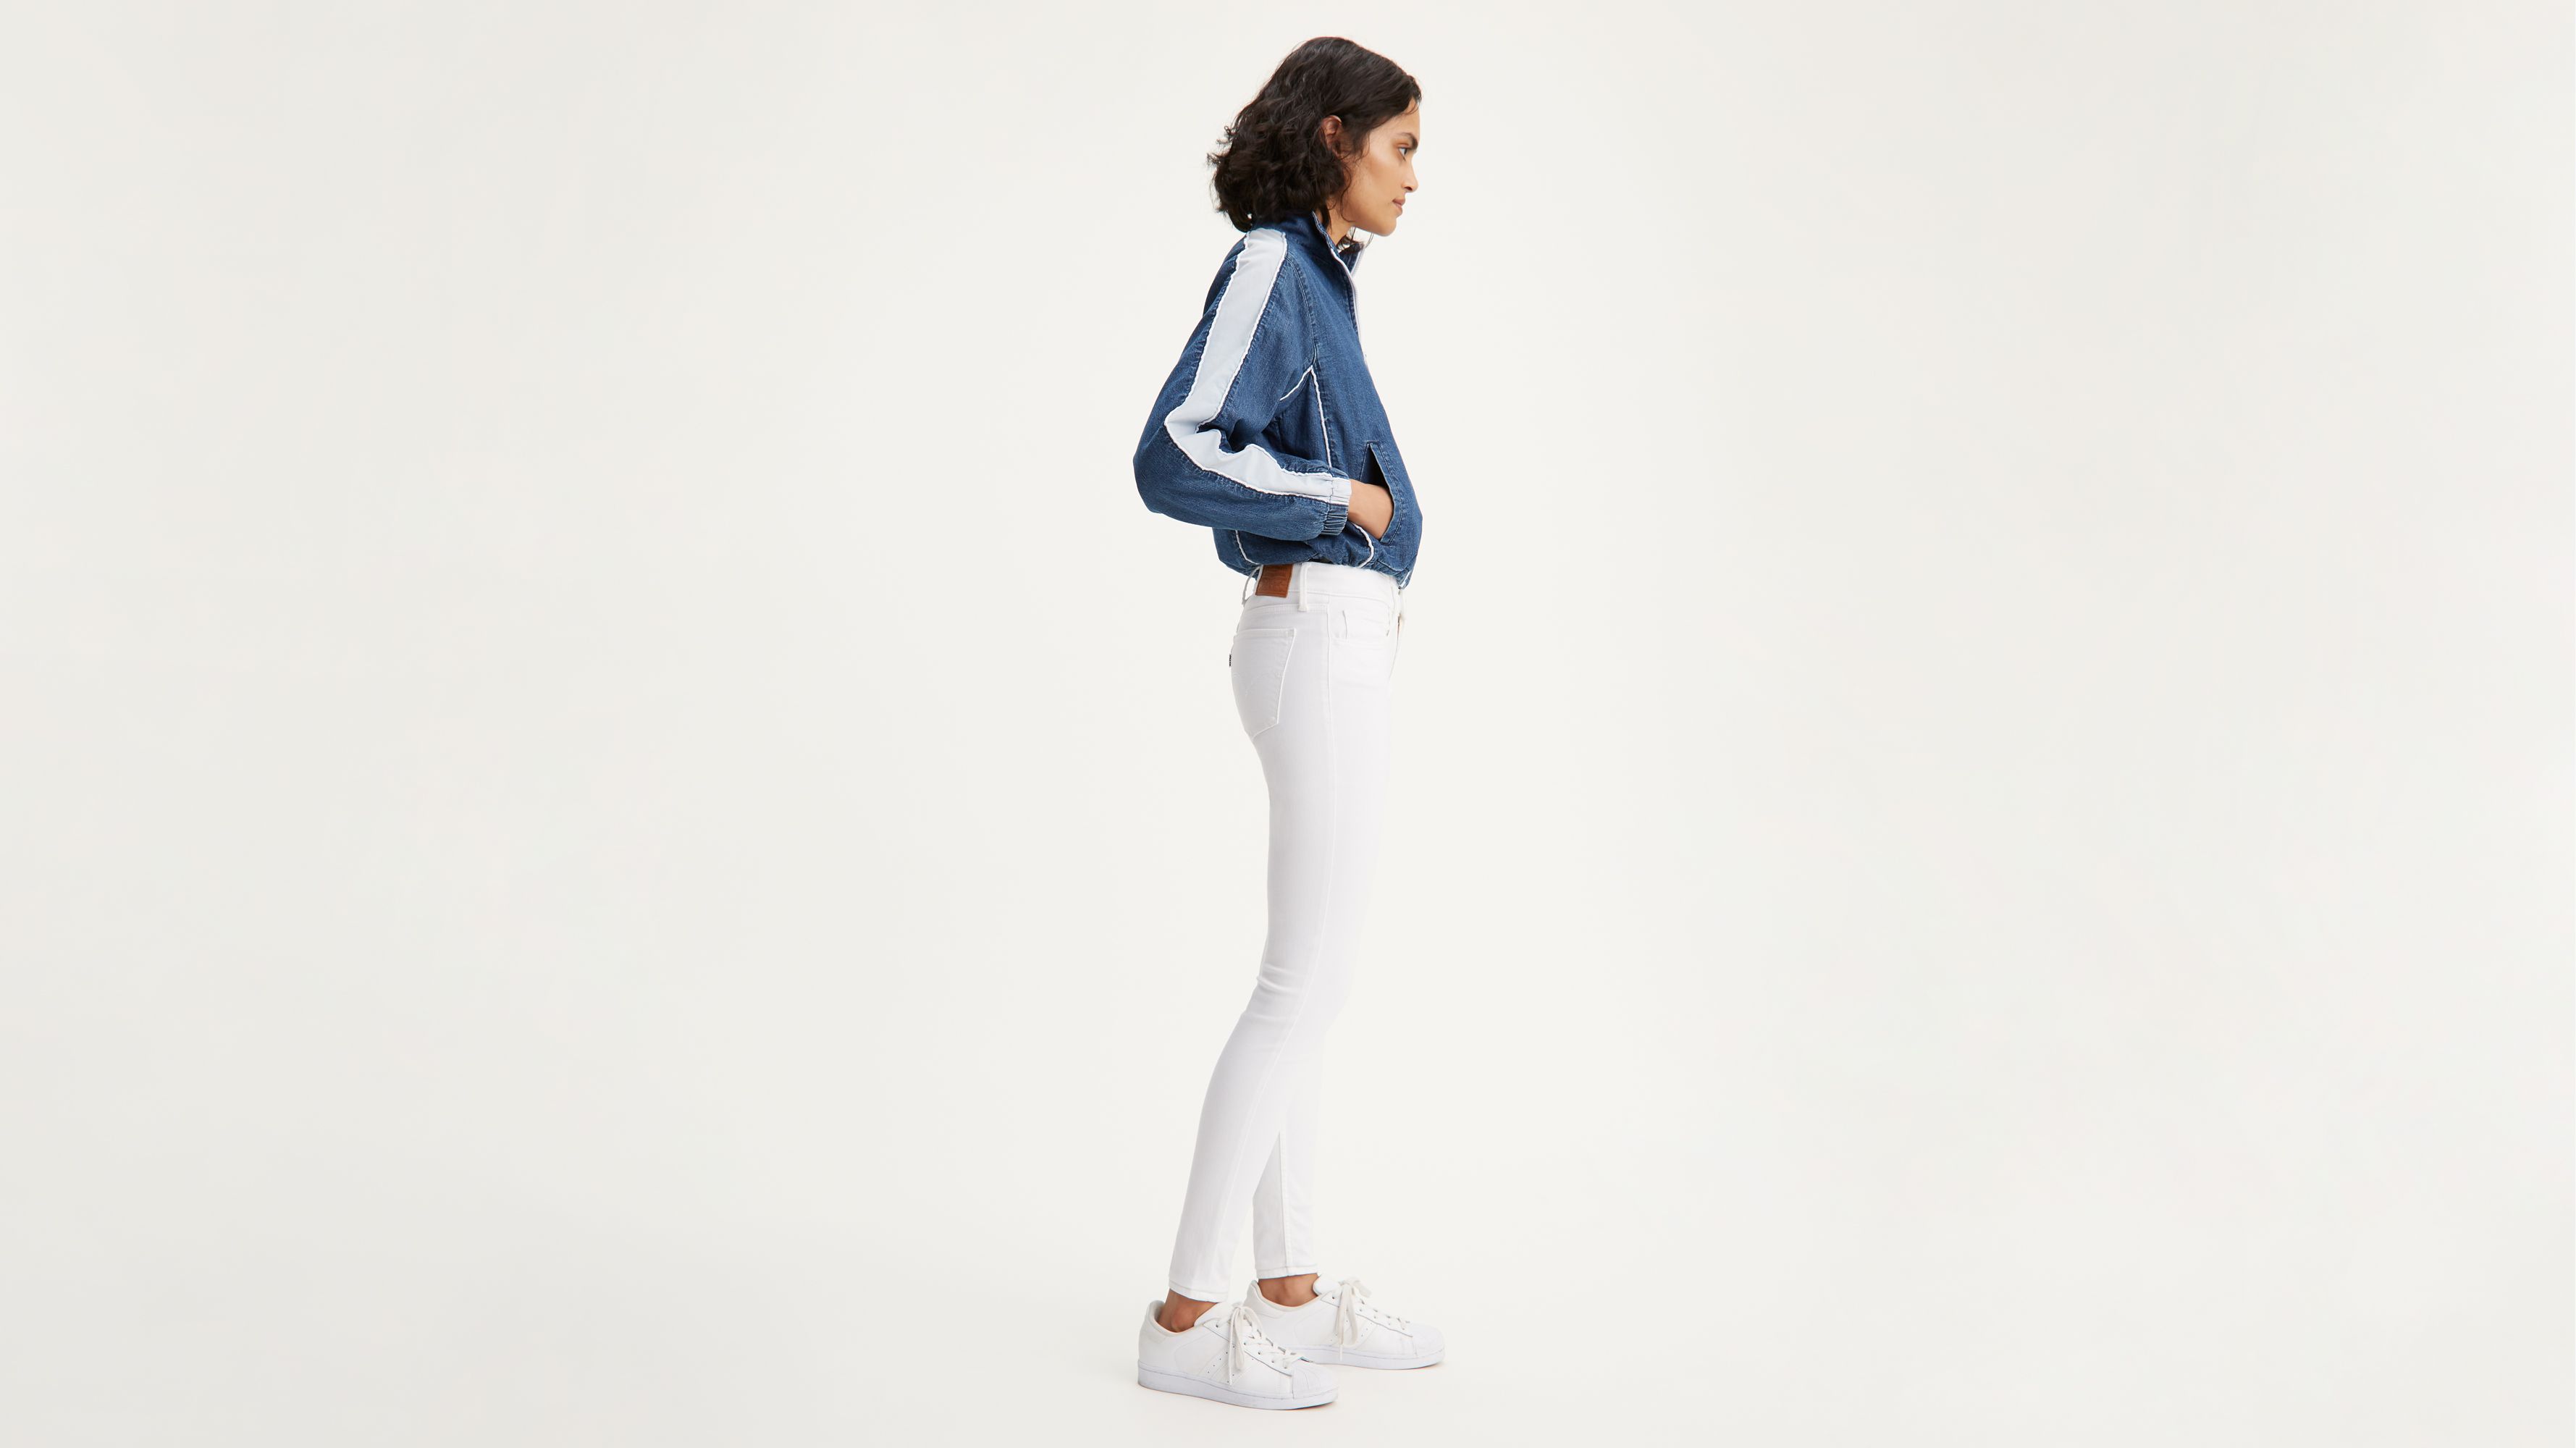 levis 710 super skinny jeans - white